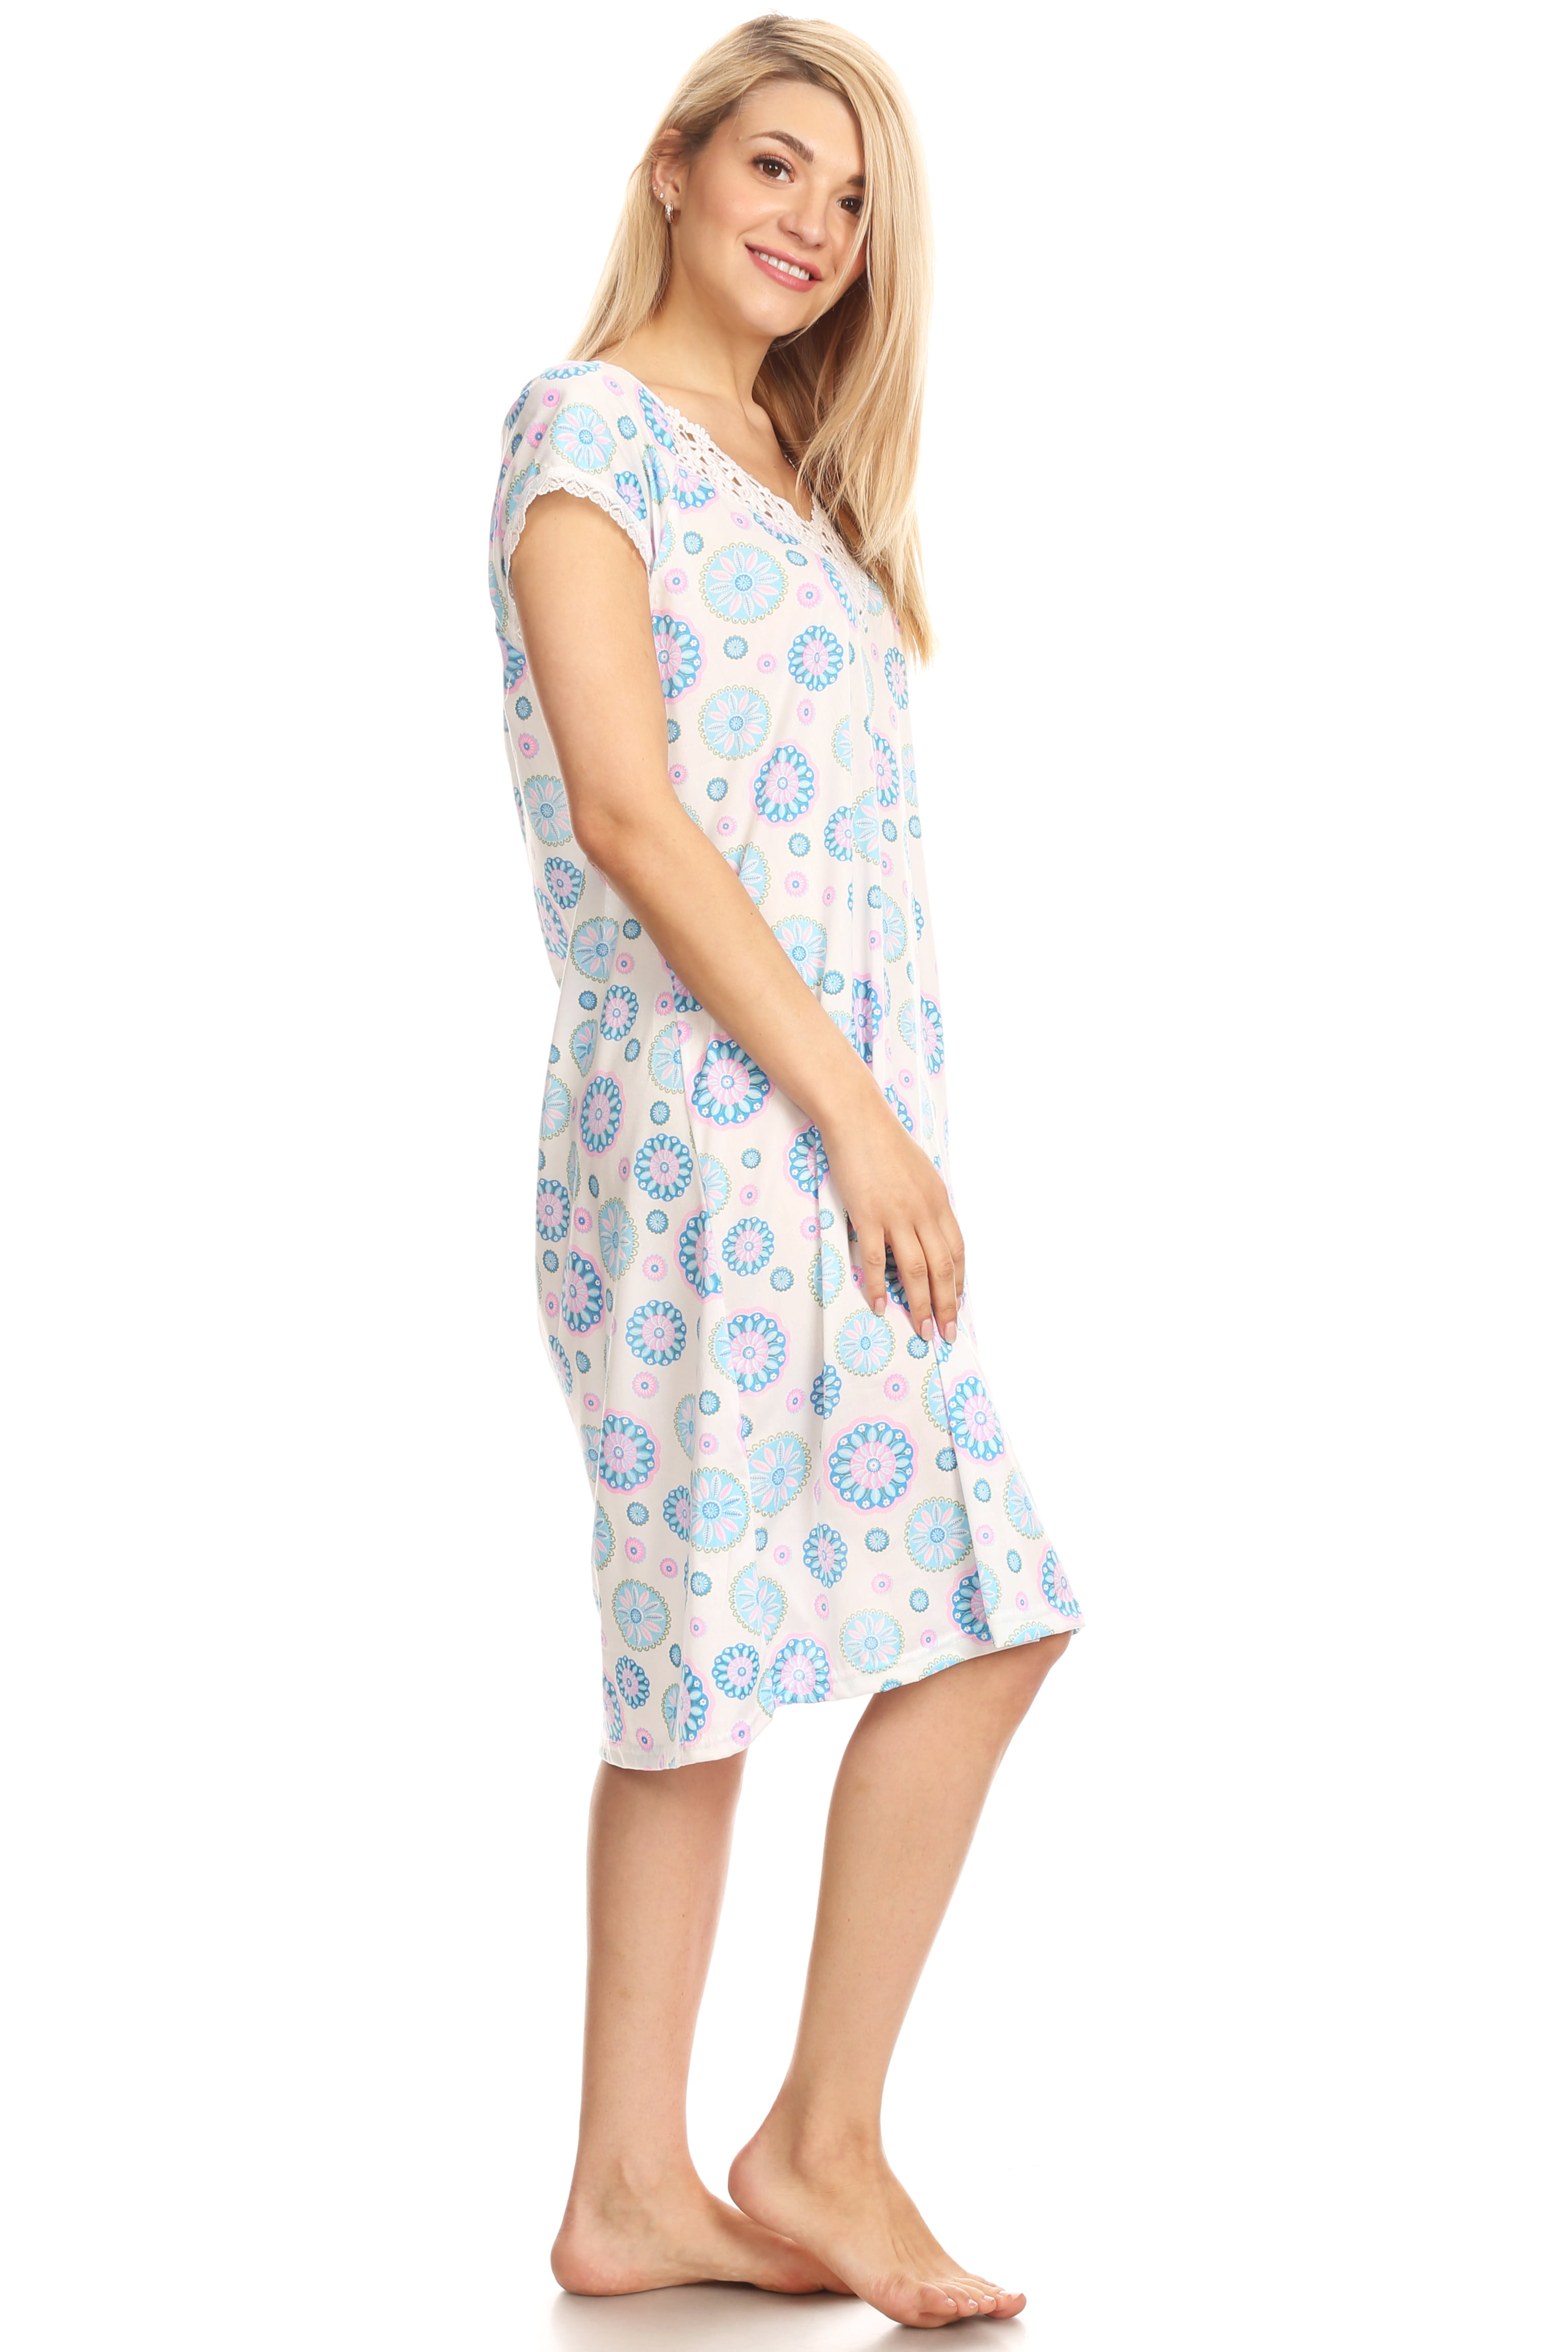 Womens Nightgown Sleepwear Pajamas - Woman Sleeveless Sleep Dress ...